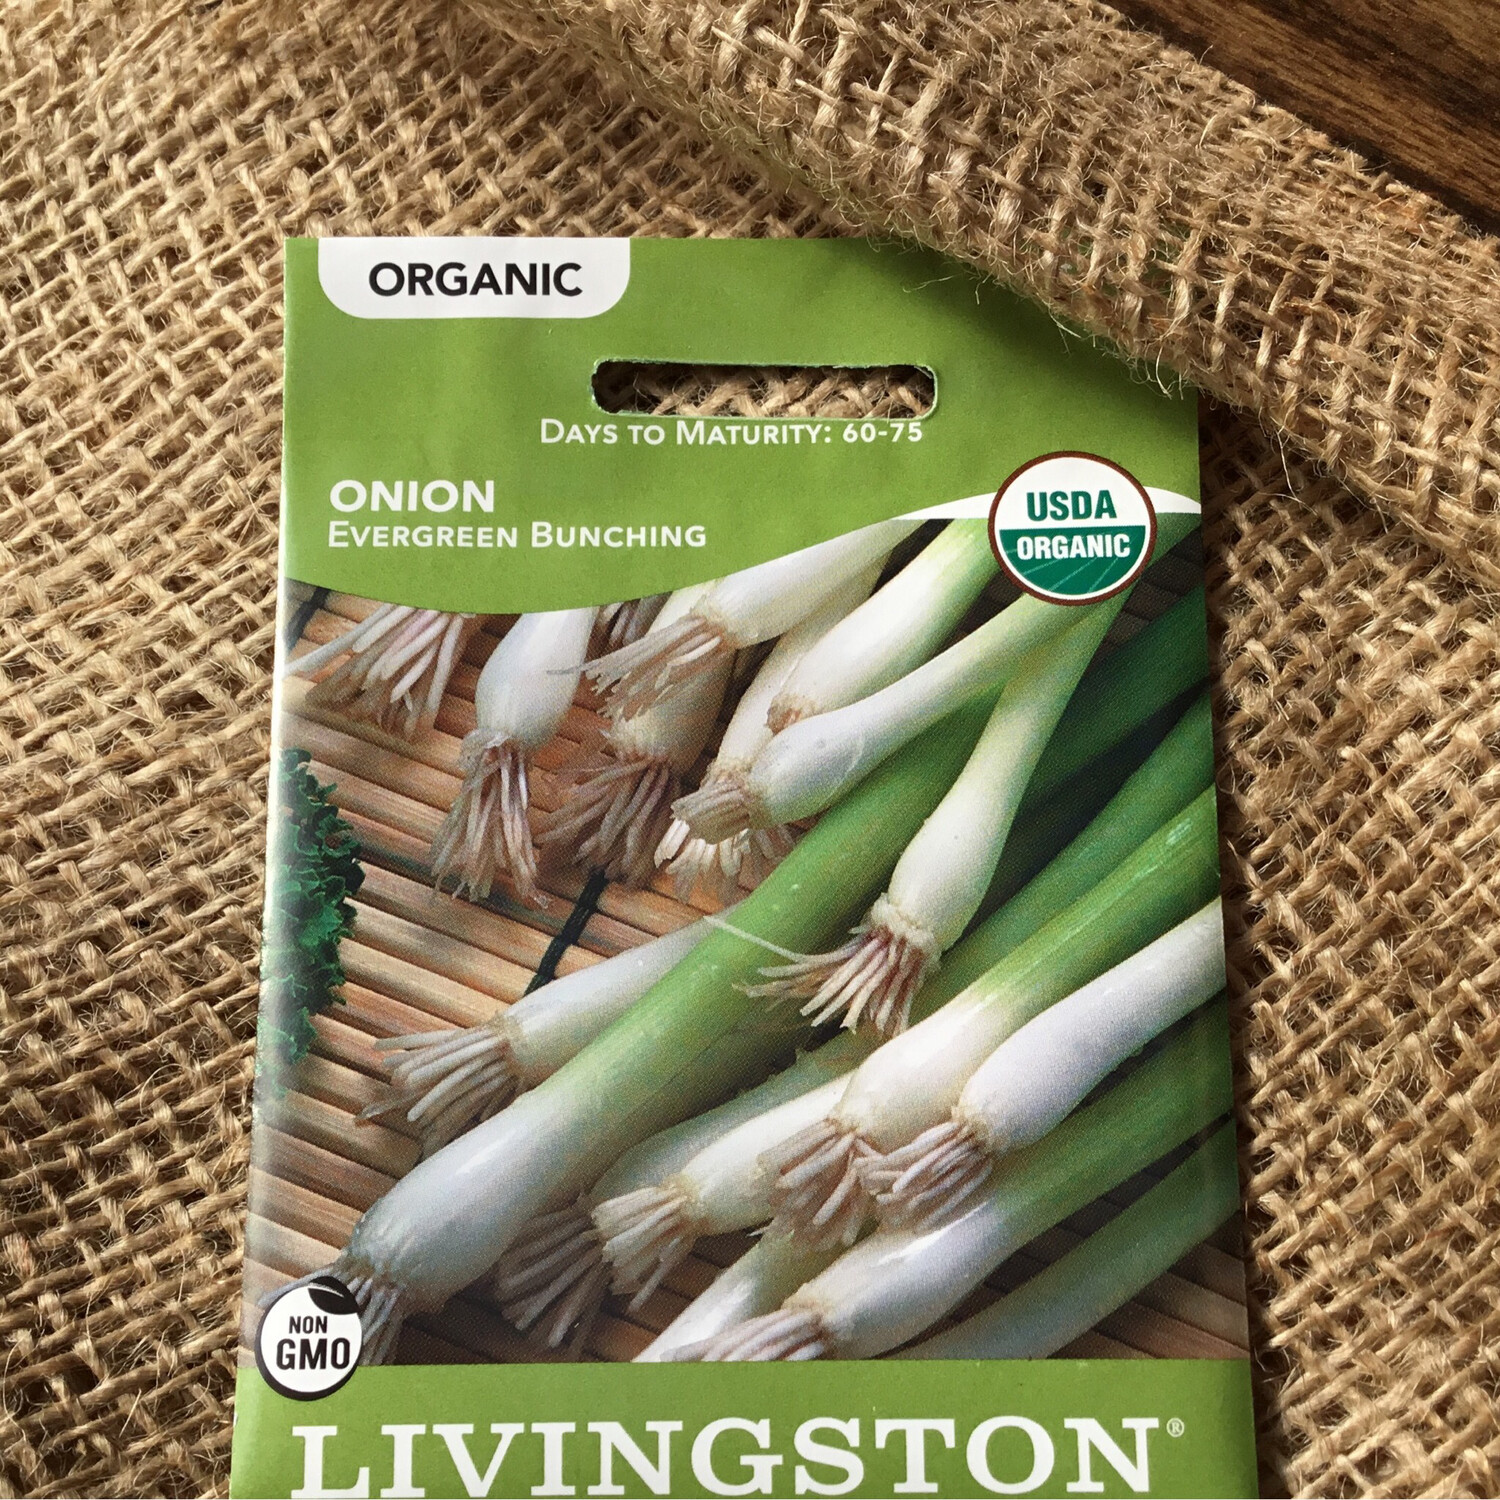 (Seed) Organic Onion Evergreen Bunching $3.79